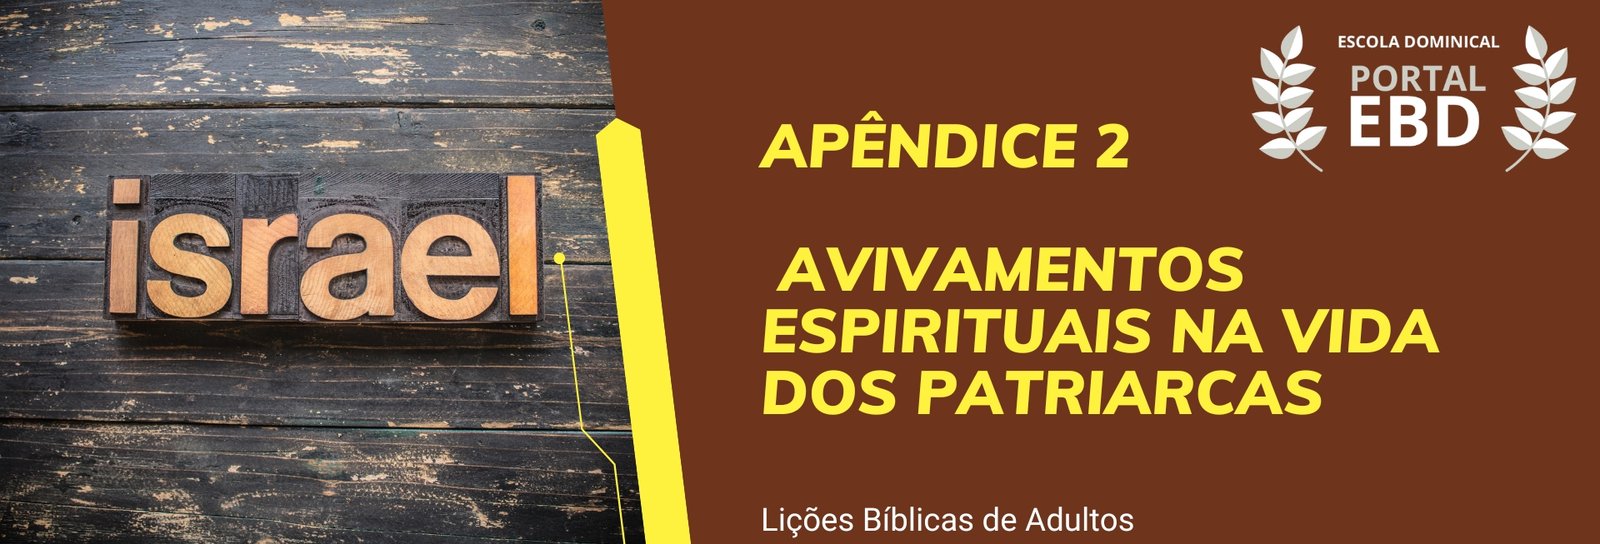 Apêndice 2 - Avivamentos espirituais na vida dos Patriarcas